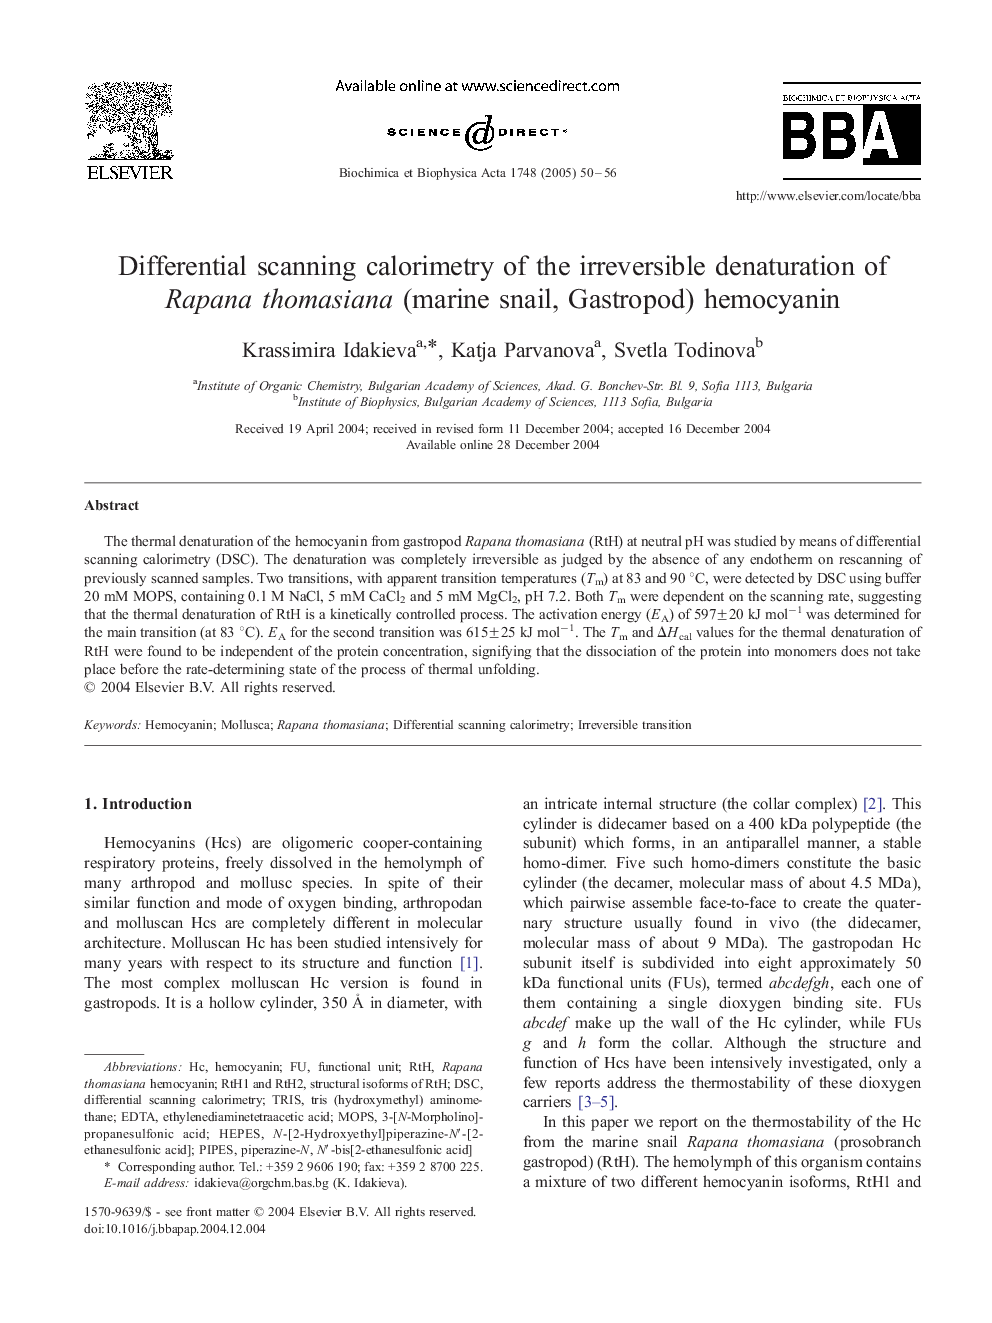 Differential scanning calorimetry of the irreversible denaturation of Rapana thomasiana (marine snail, Gastropod) hemocyanin